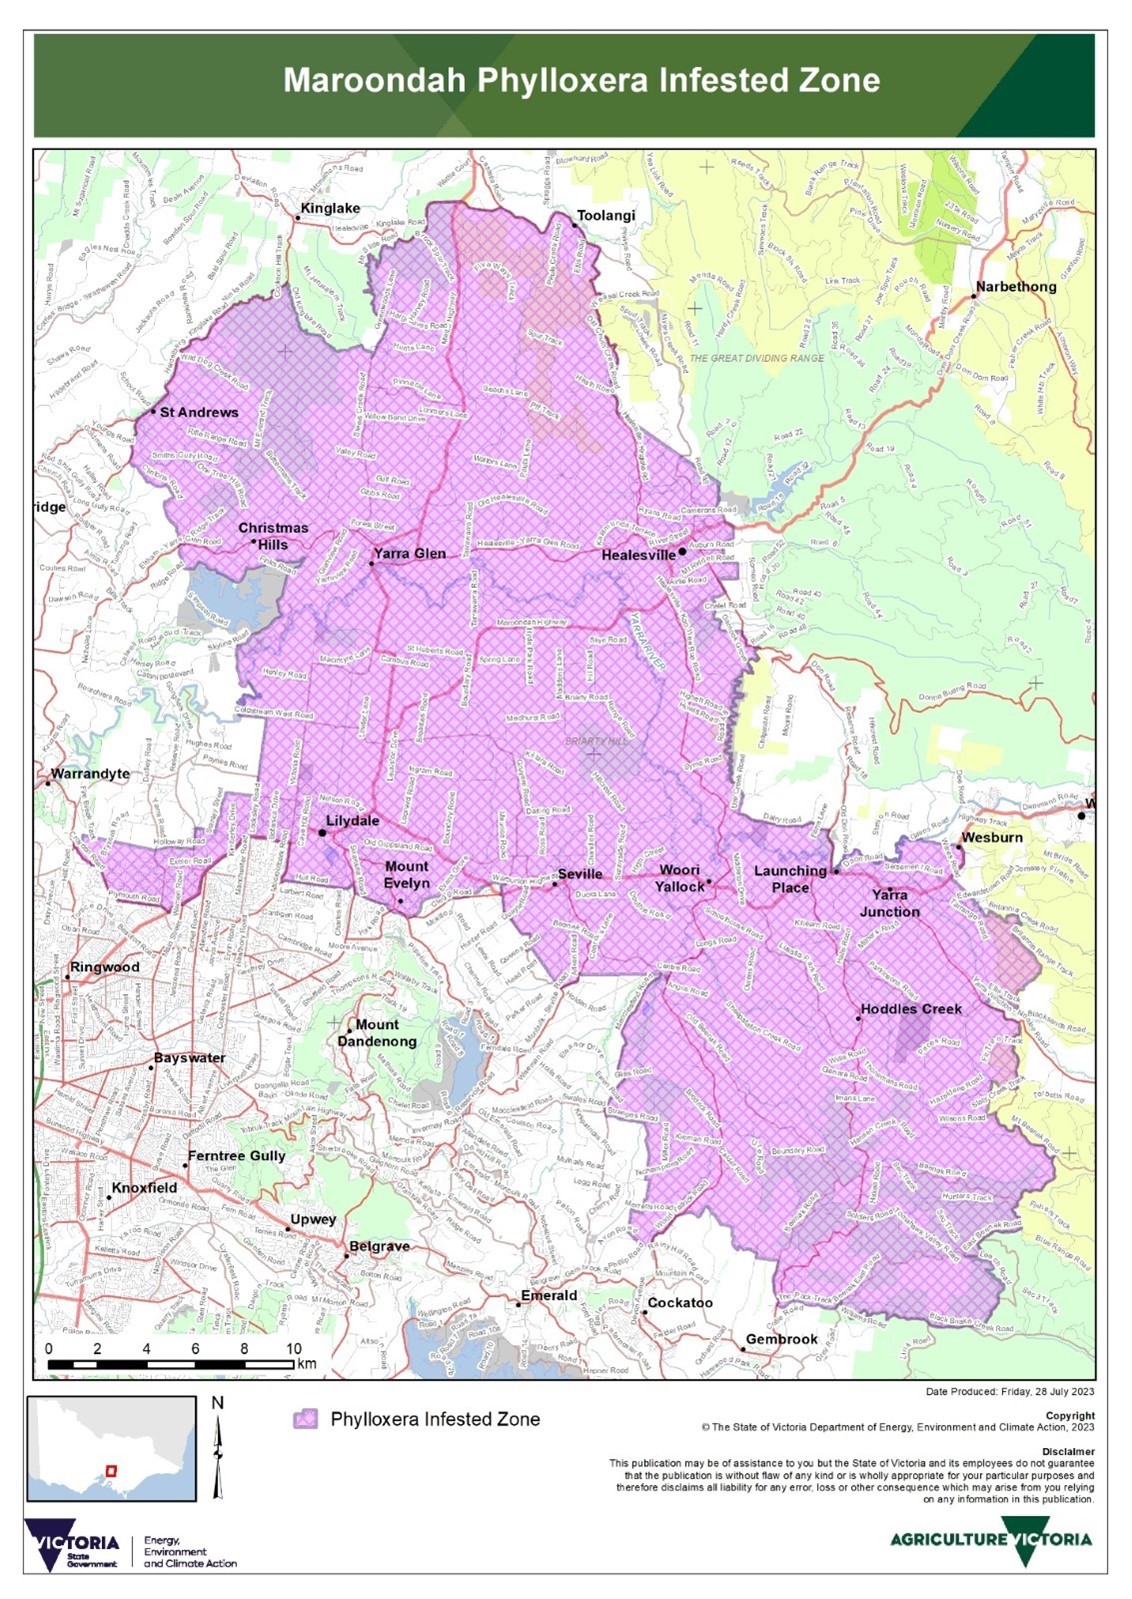 Image of map showing Maroondah Phylloxera infested zone.